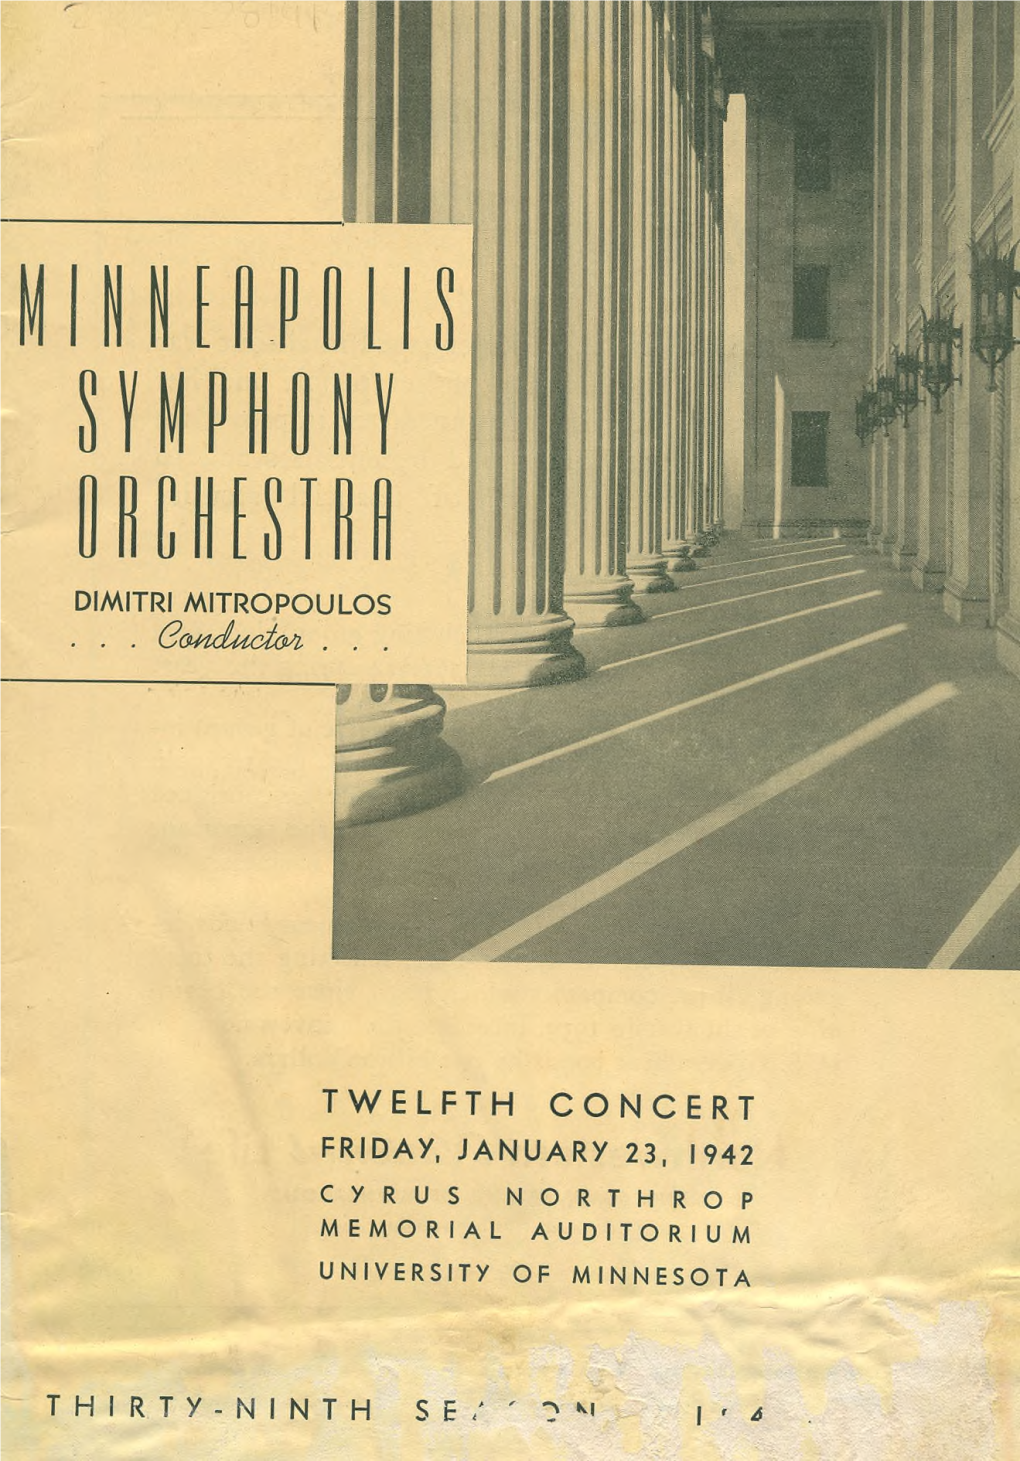 Twelfth Concert Friday, January 23, 1942